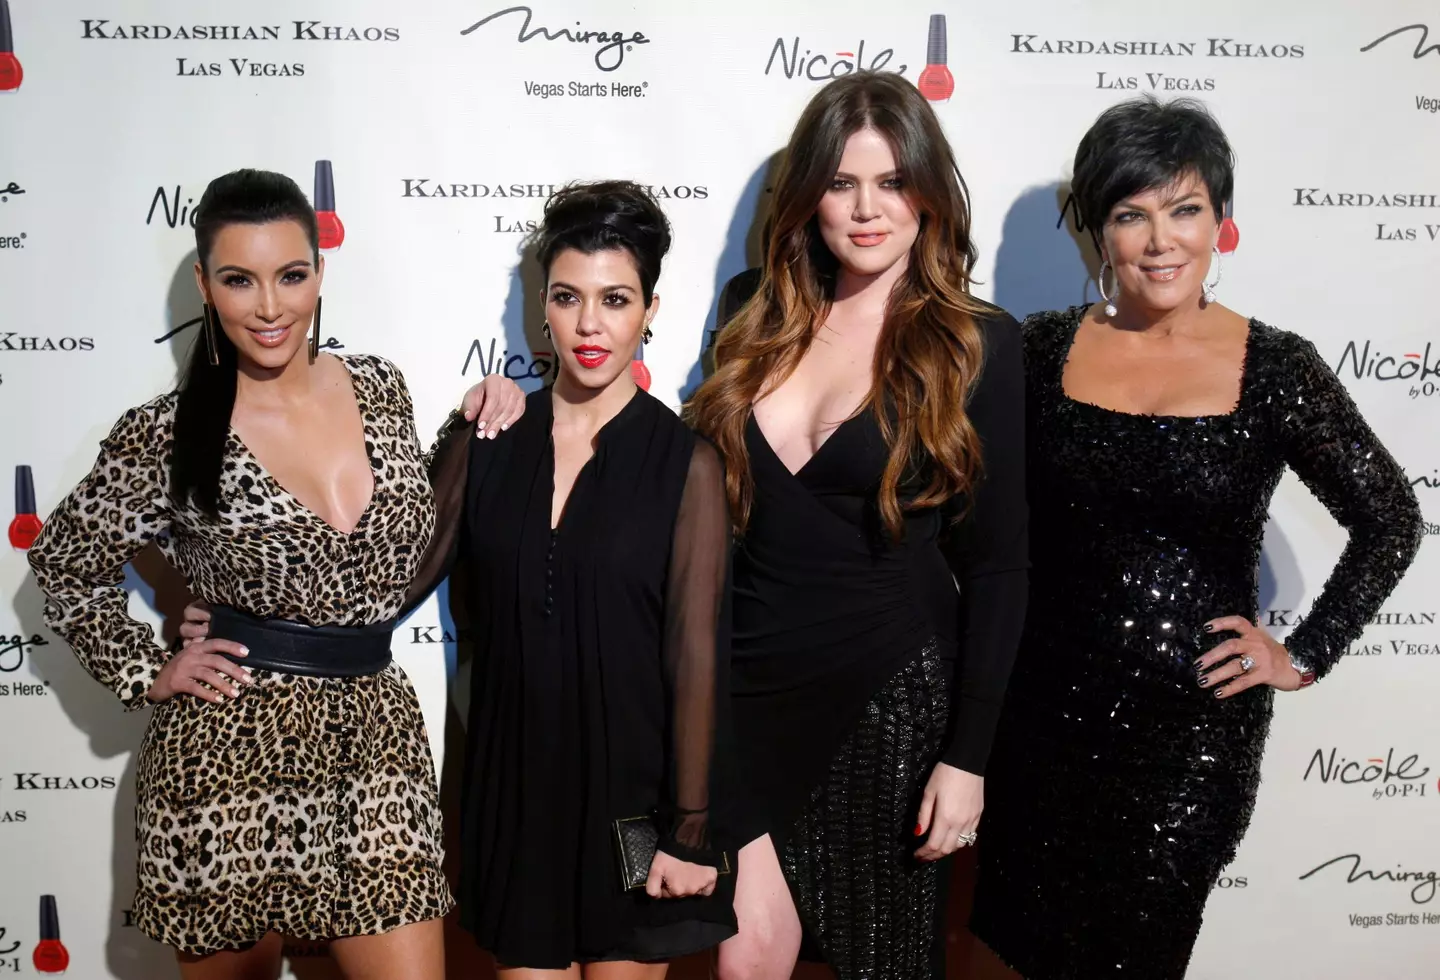 Kim Kardashian, Kourtney Kardashian, Khloe Kardashian and Kris Jenner arrive at the grand opening of the Kardashian Khaos store at the Mirage Hotel and Casino in Las Vegas, Nevada. Credit Alamy/Reuters